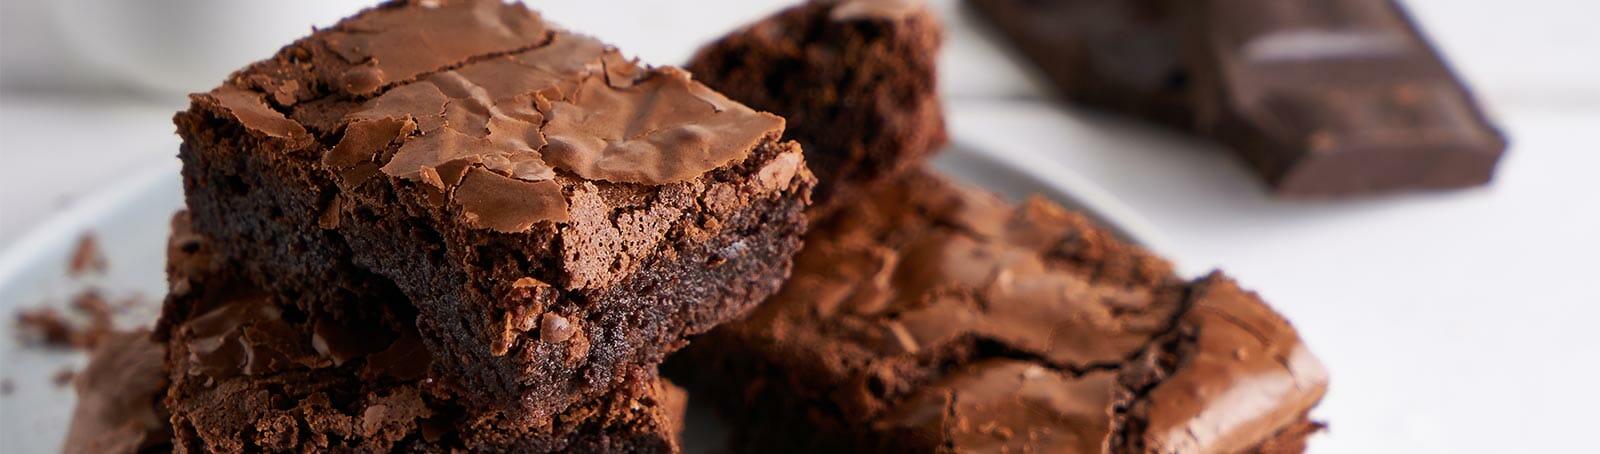 Potente Hash-Brownies backen - das Rezept